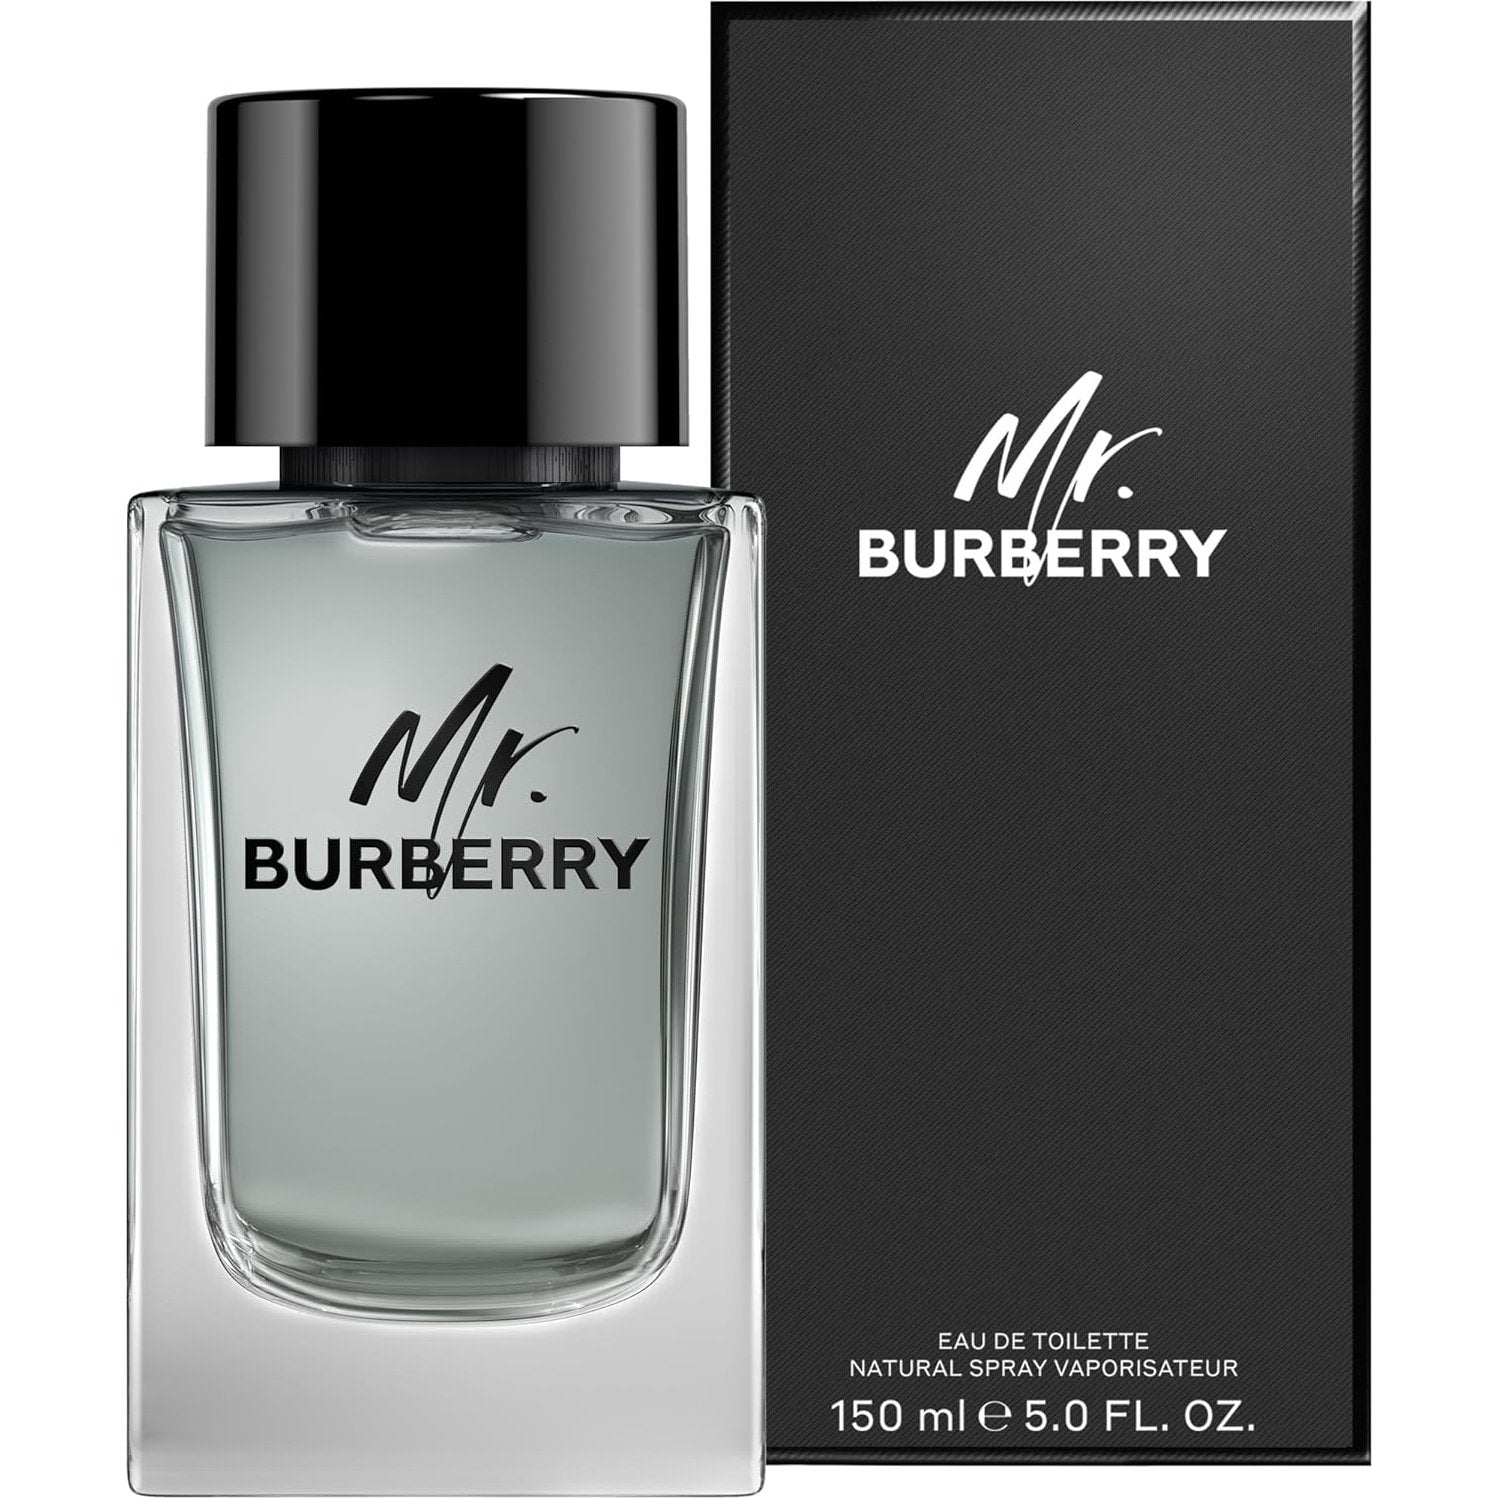 Burberry Mr. Burberry Eau de Toilette 150ml Spray